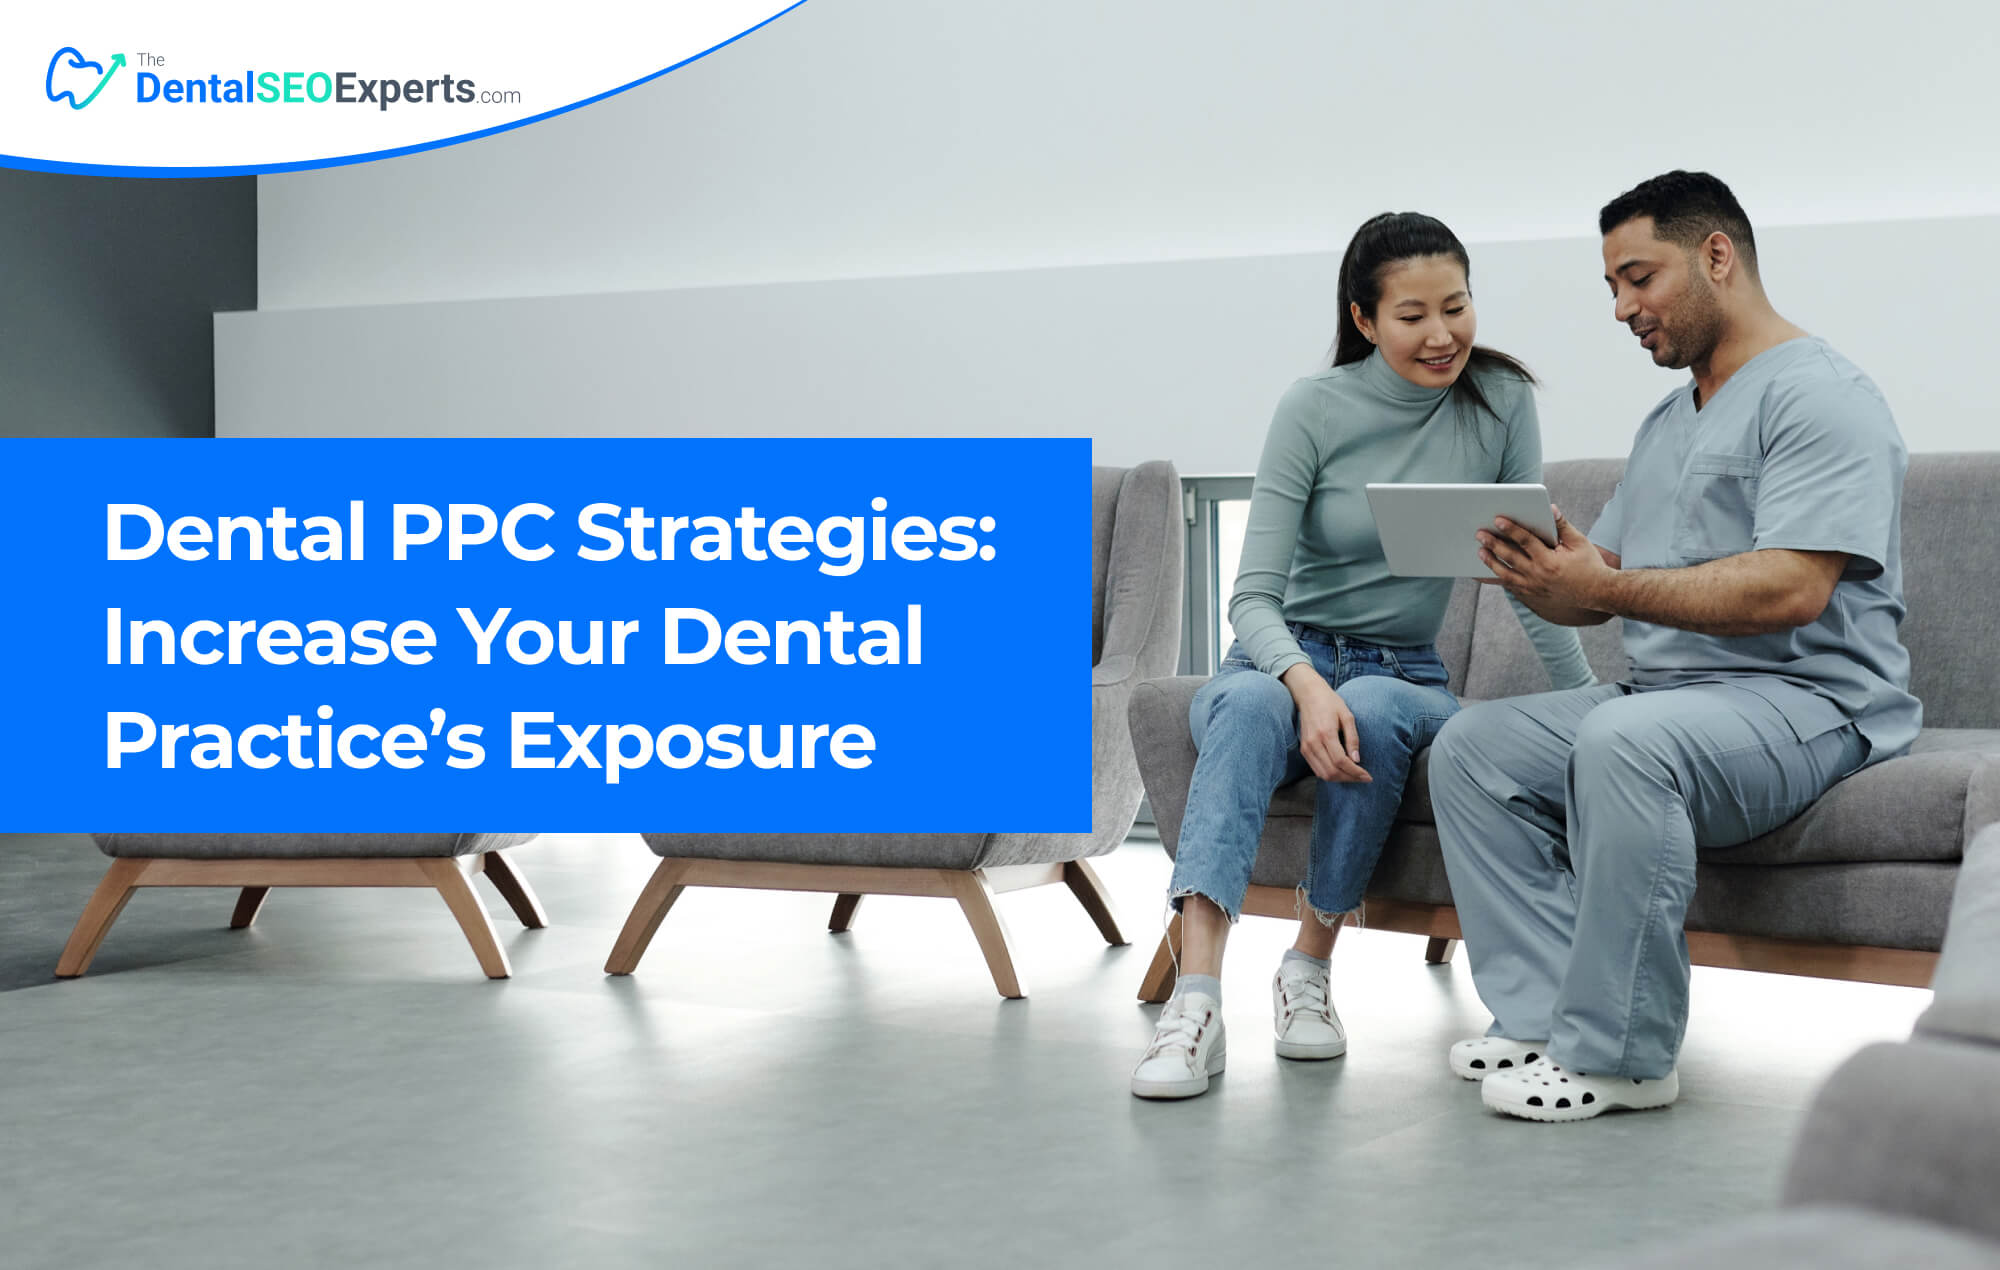 TheDentalSEOExperts - Dental PPC Strategies Increase Your Dental Practices Exposure